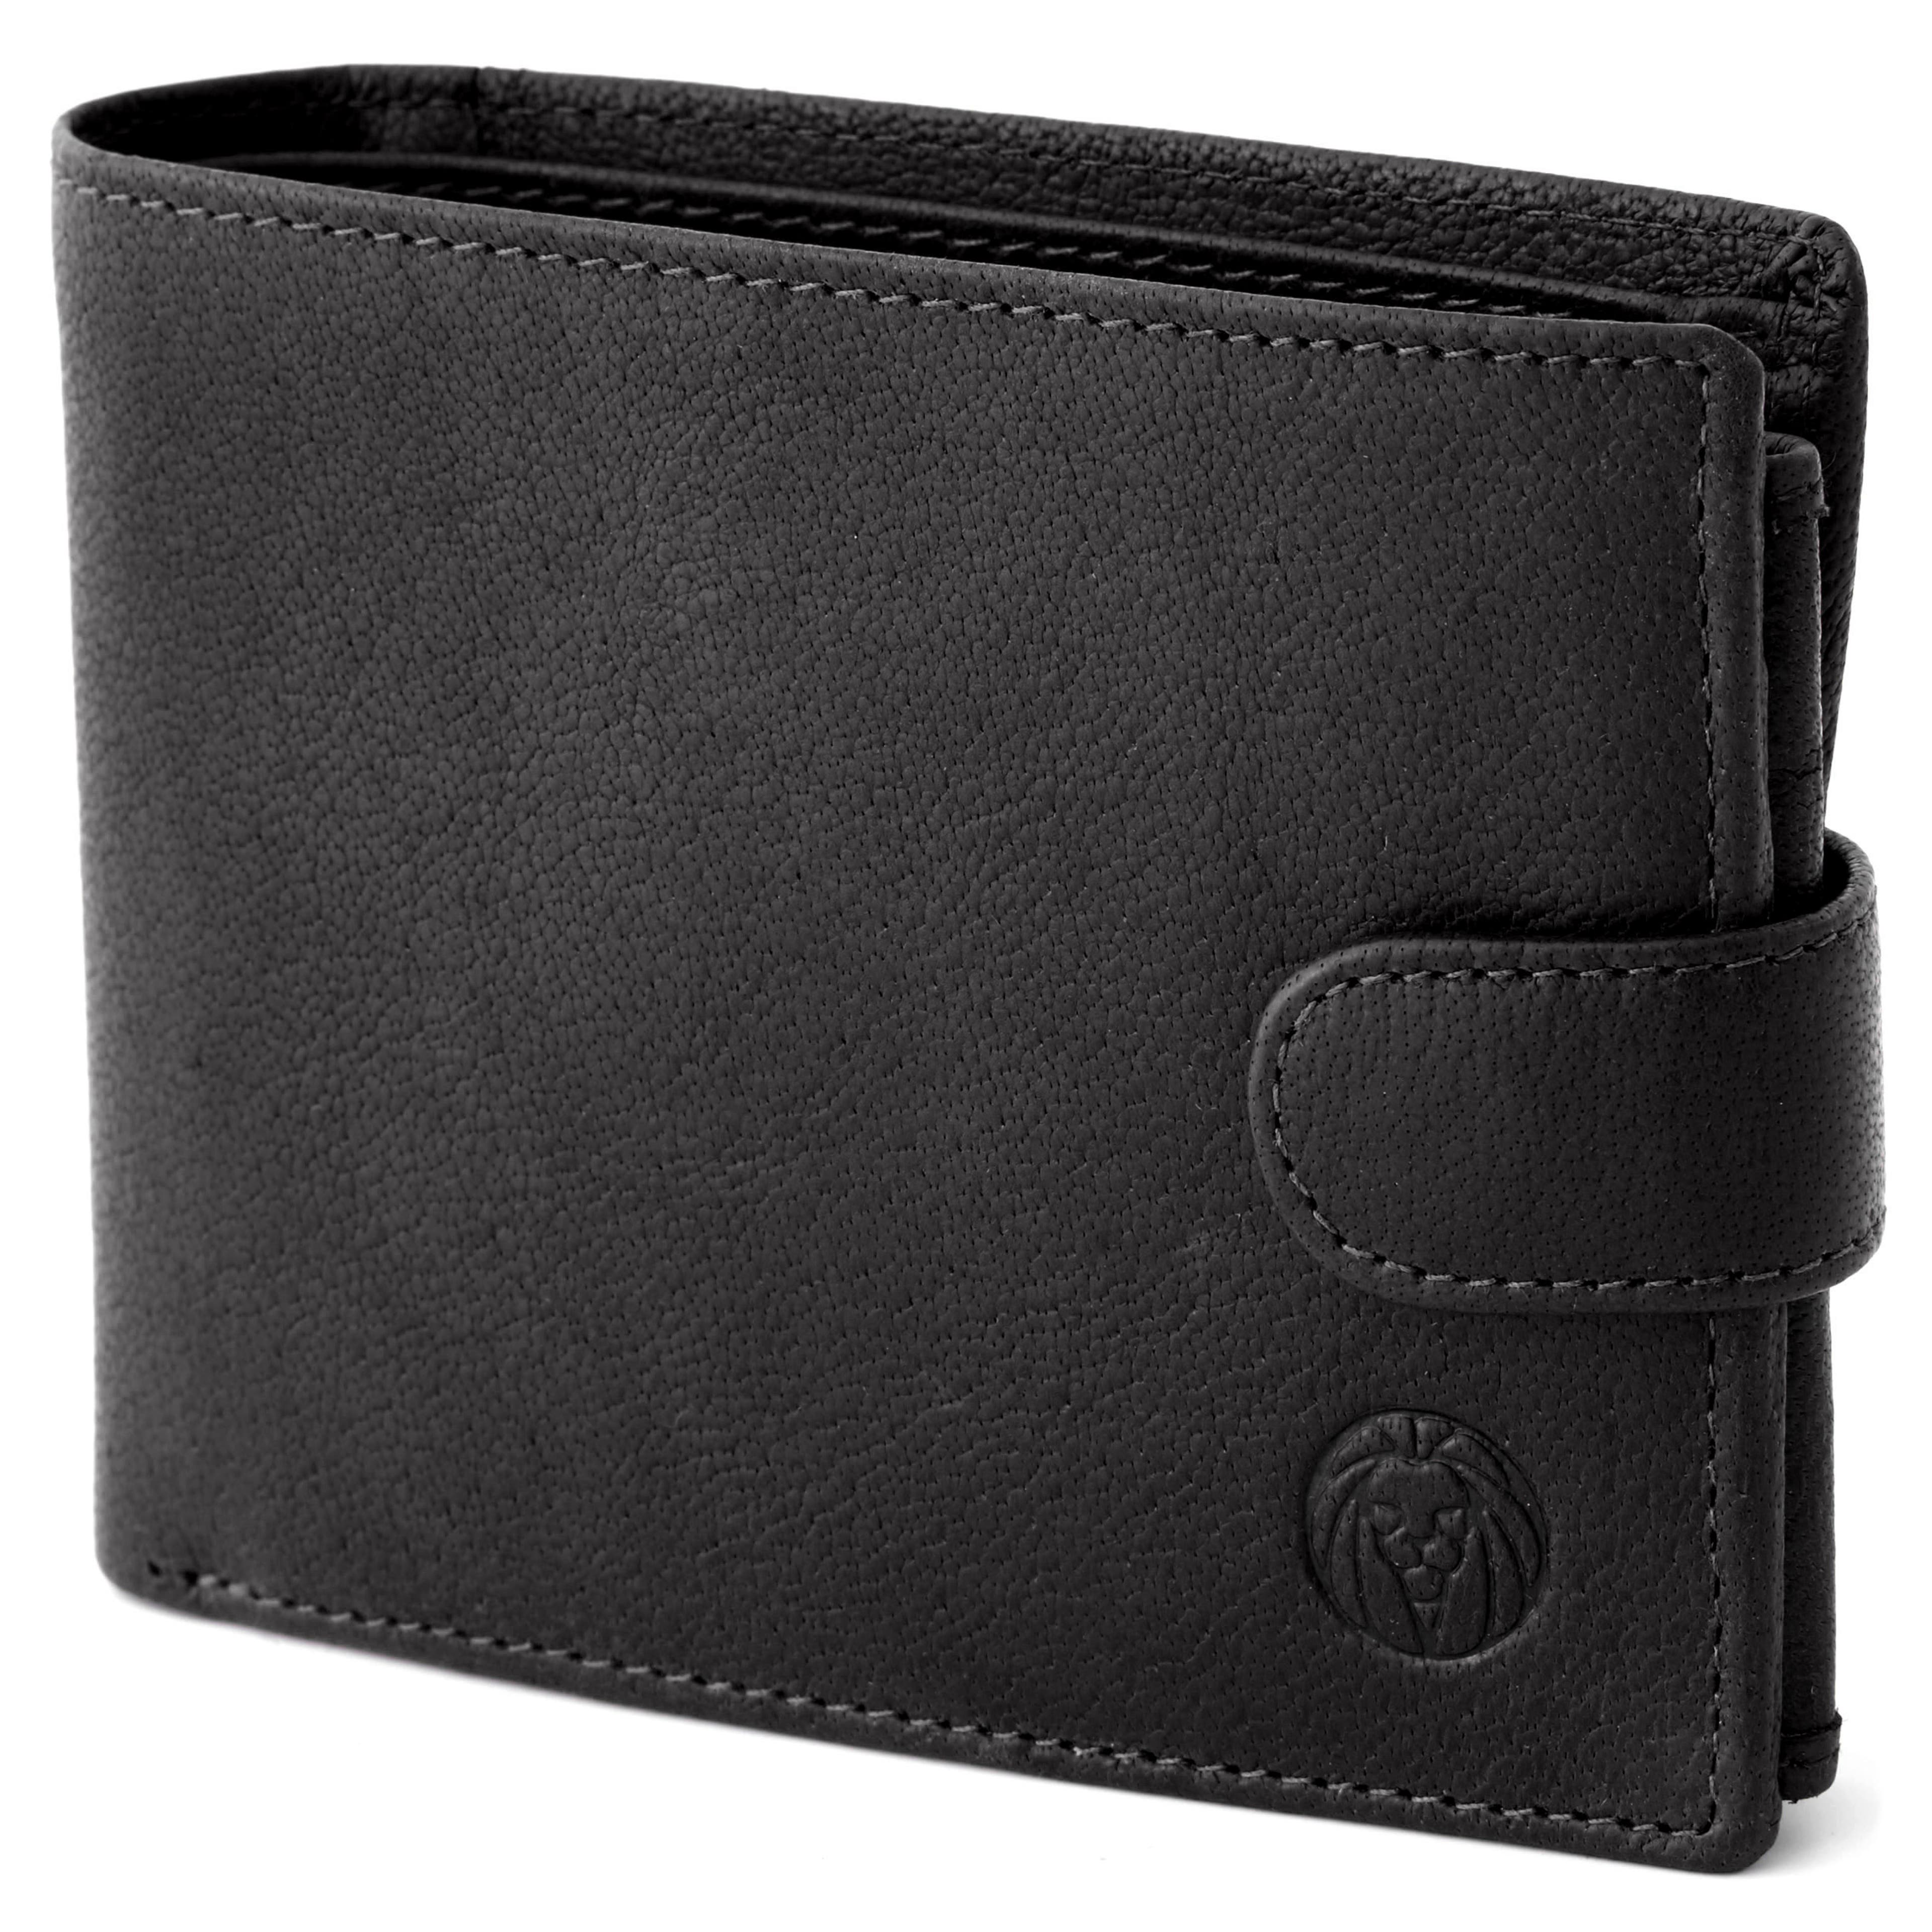 California | Black Ergonomic Leather Wallet